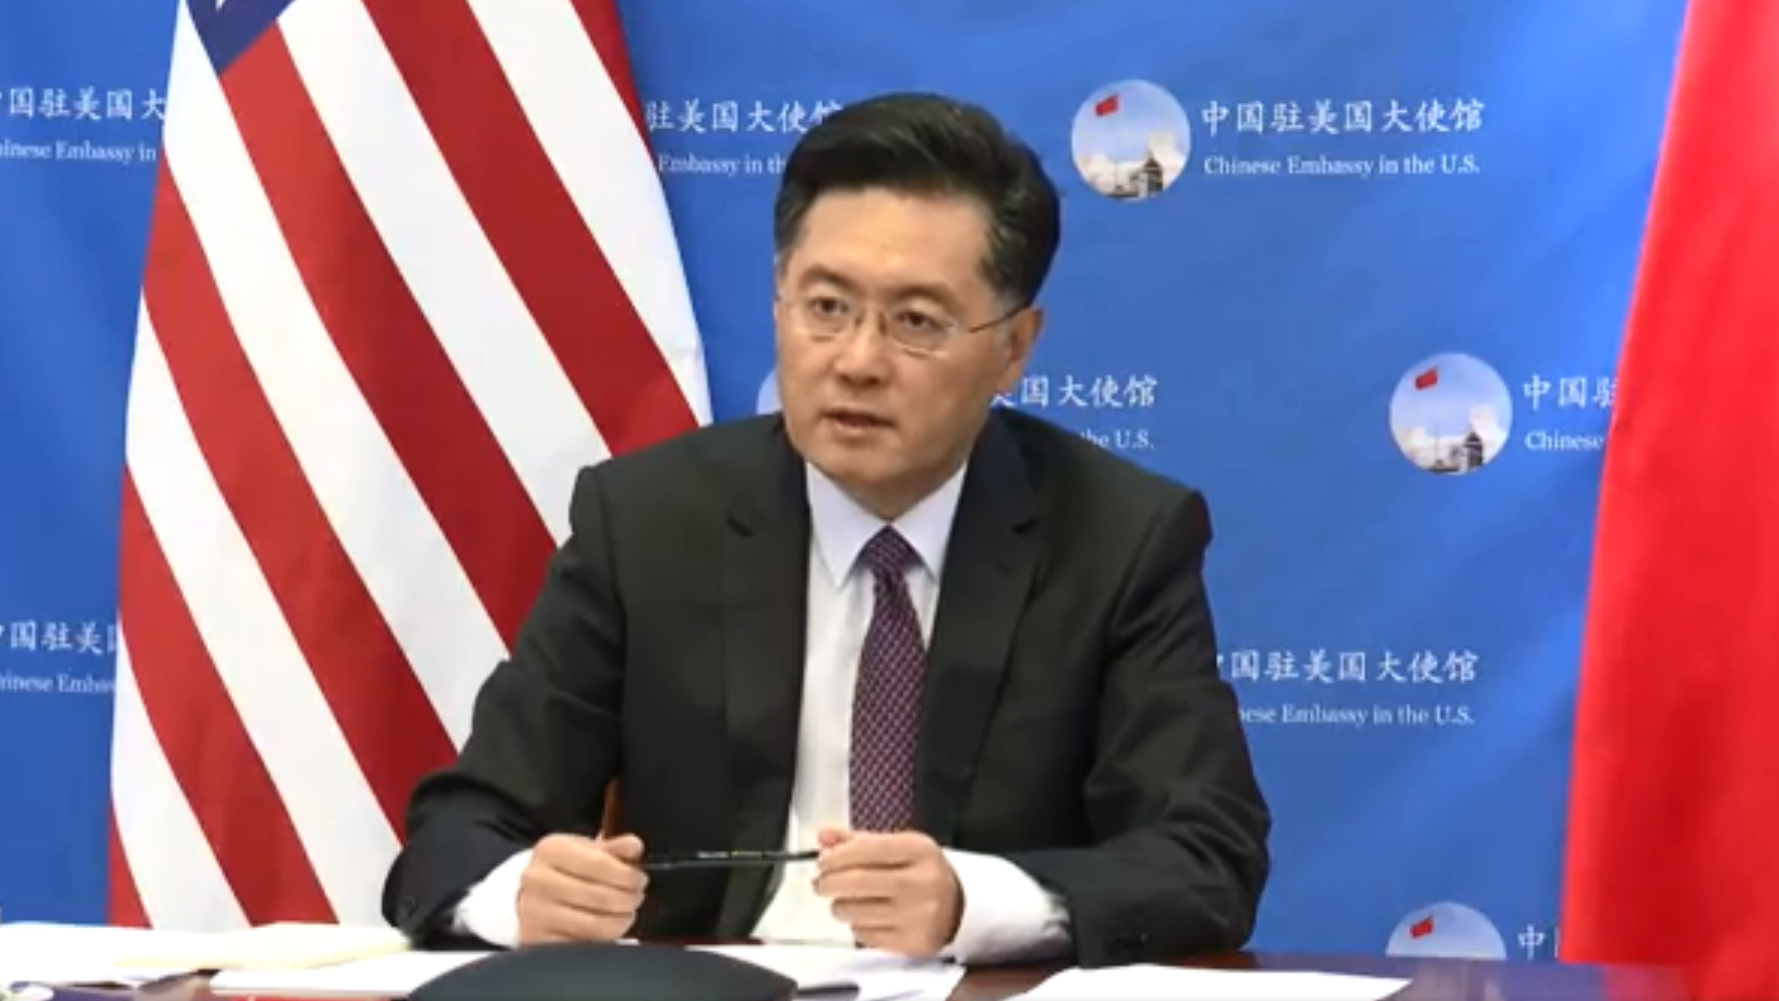 China hopes U.S. creates conditions for trade deal: ambassador